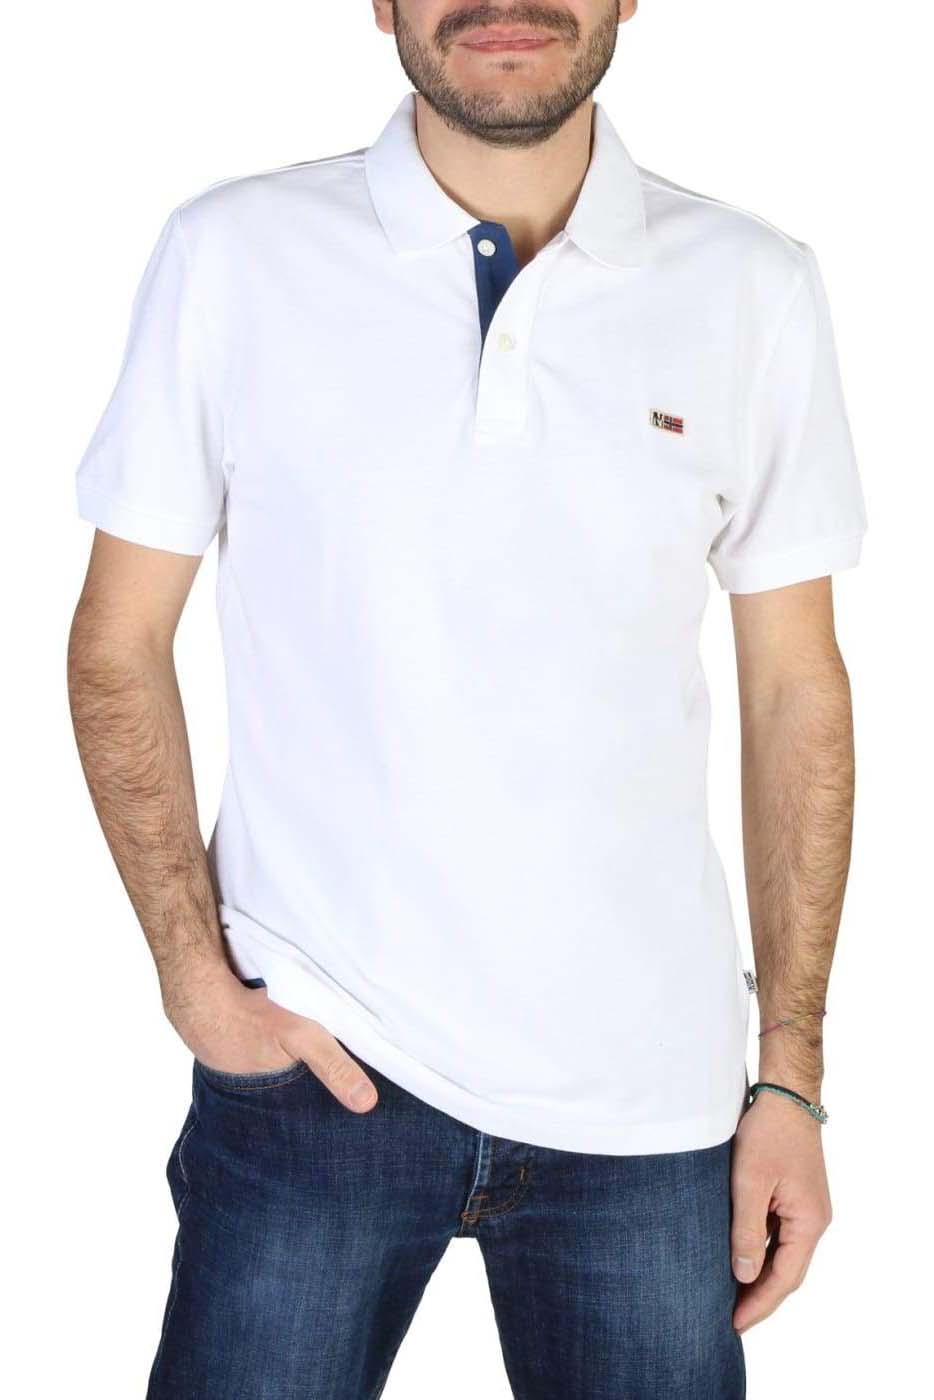 Polo Moschino de Algodón de color Blanco para hombre Hombre Ropa de Camisetas y polos de Polos 